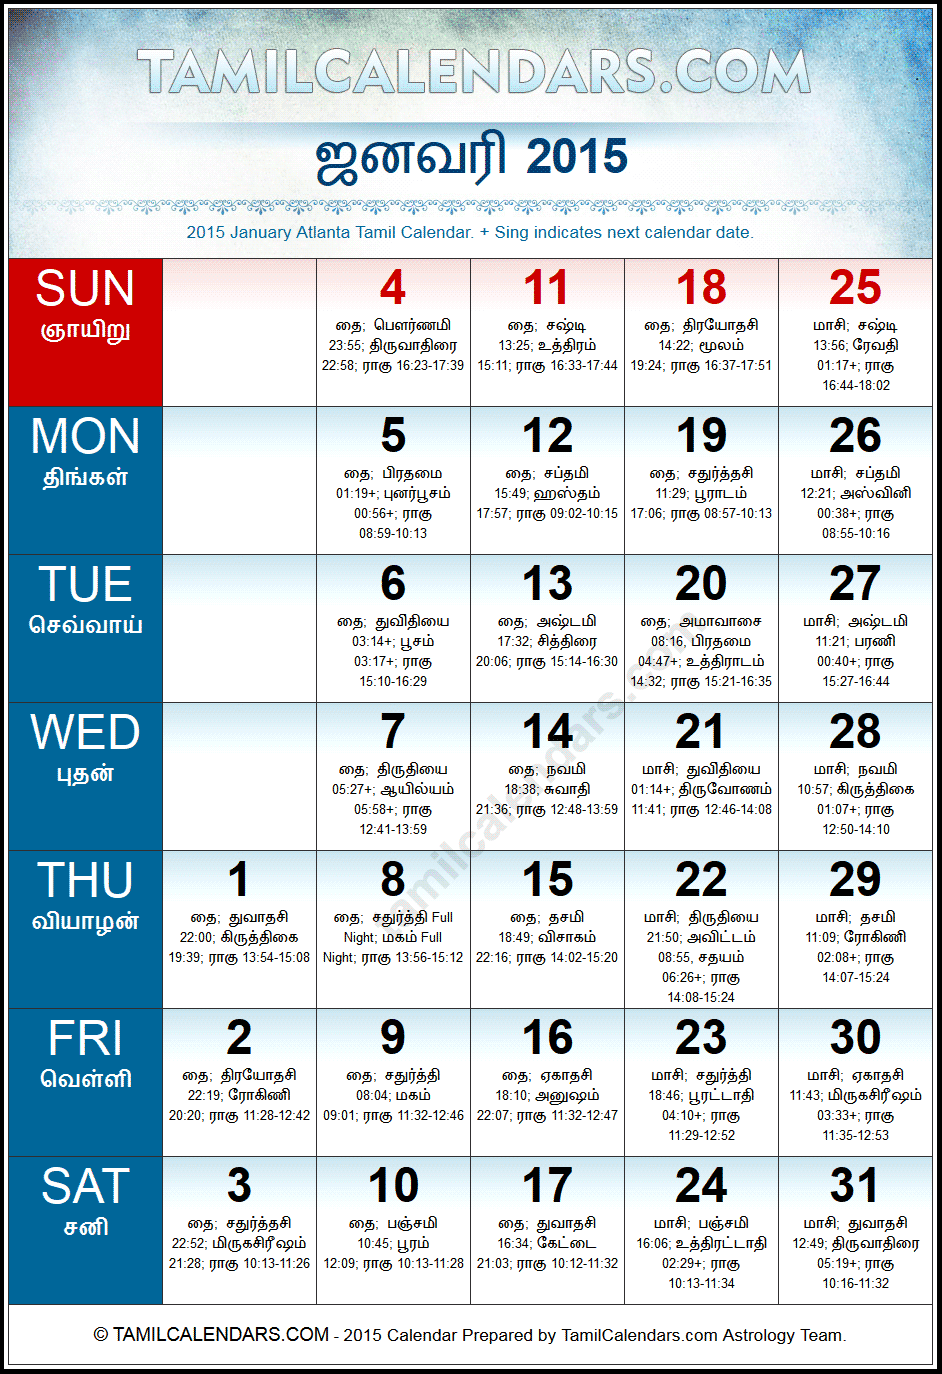 January 2015 Atlanta Tamil Calendar Download USA Tamil Calendars PDF